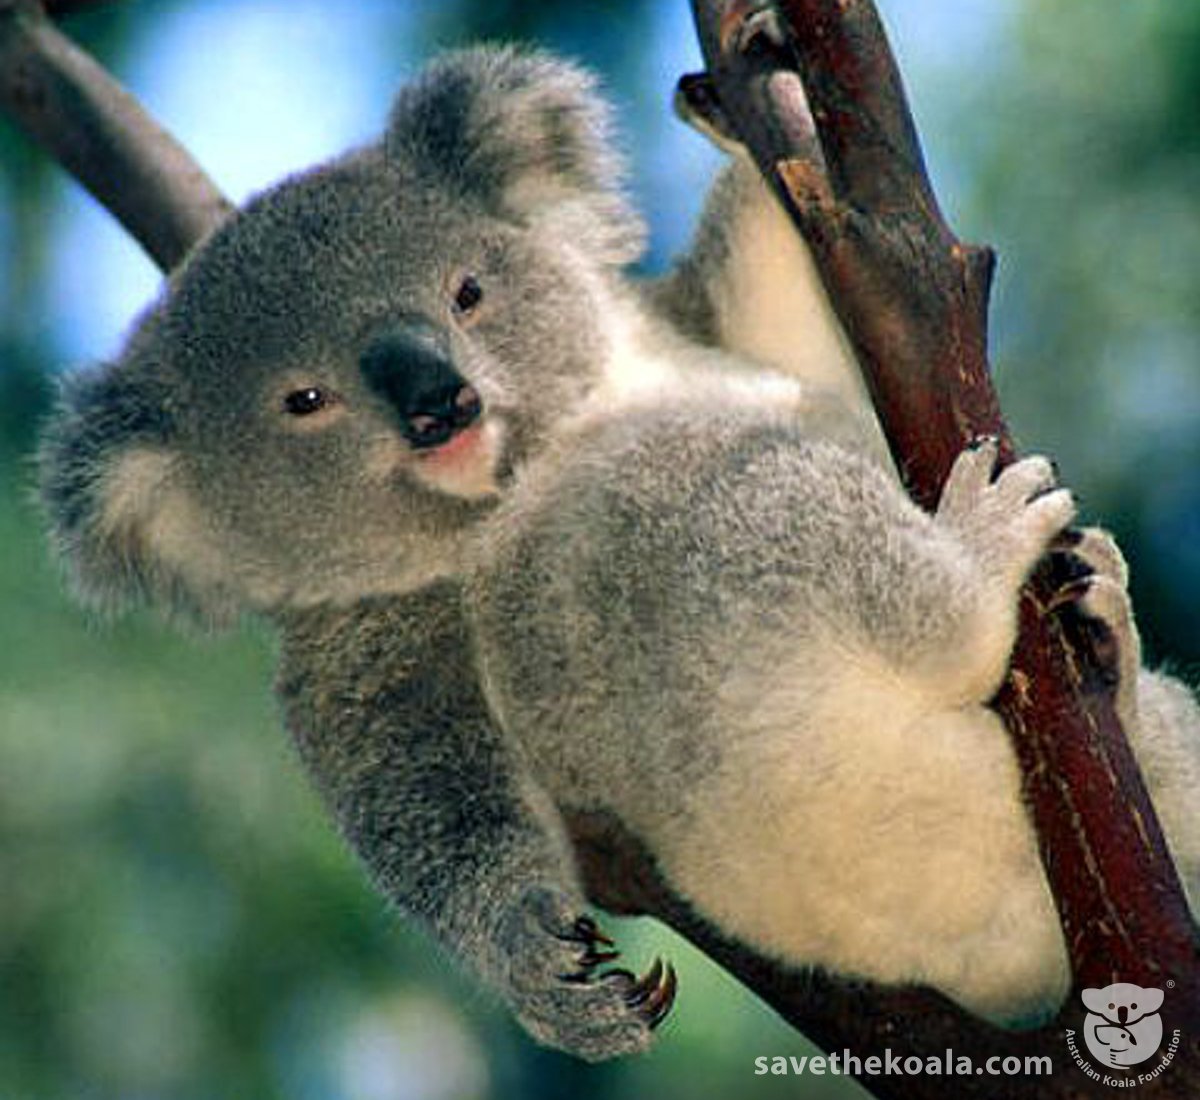 19th November 2015 - Australian Koala Foundation